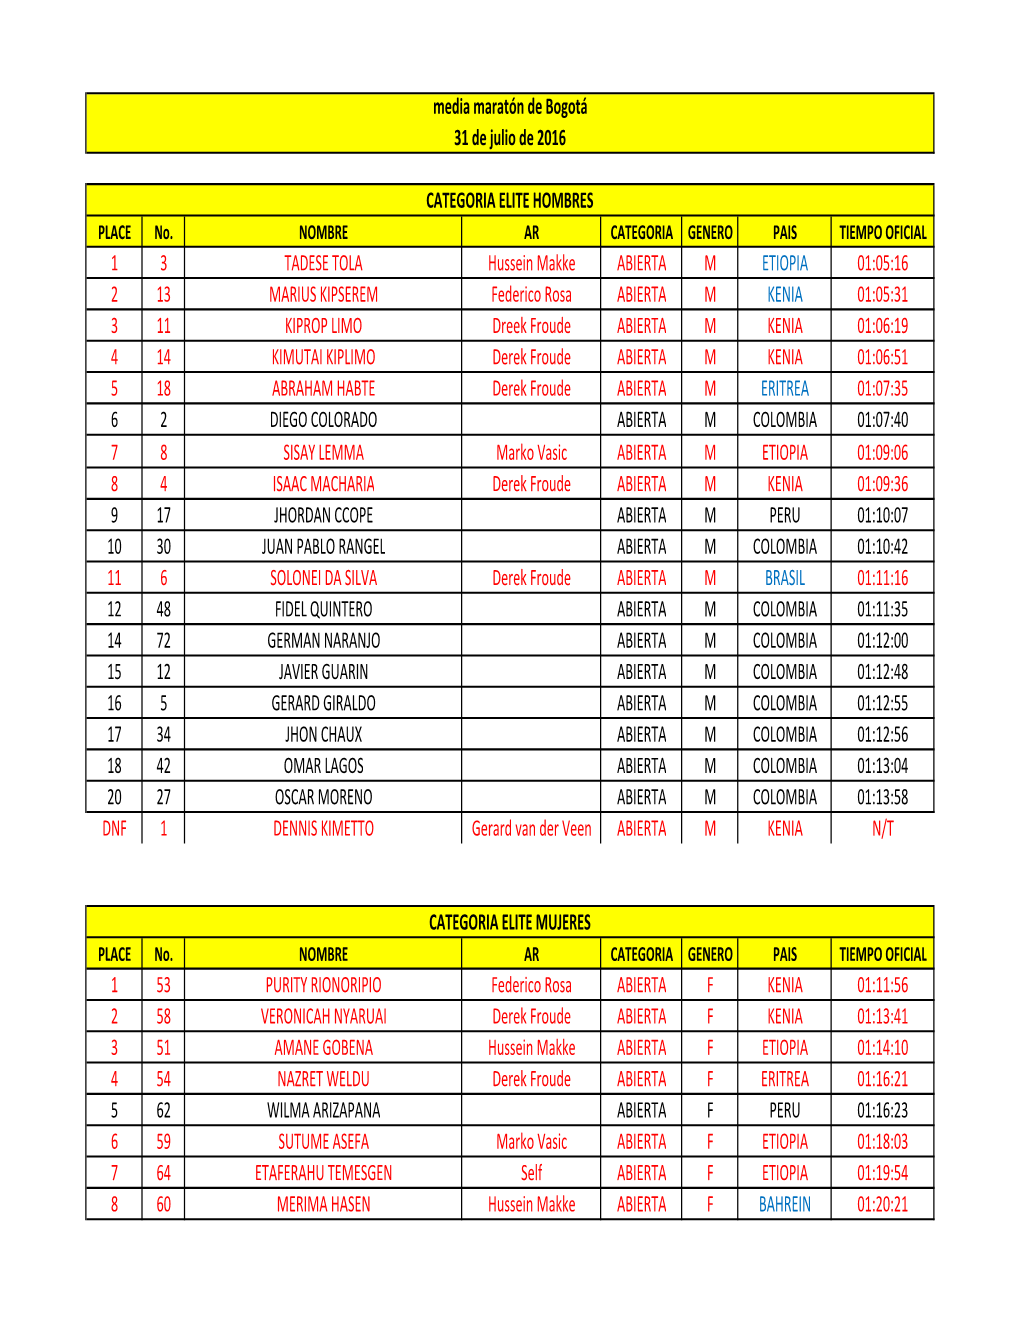 IAAF Report Bogotá Atletas Elite 2016